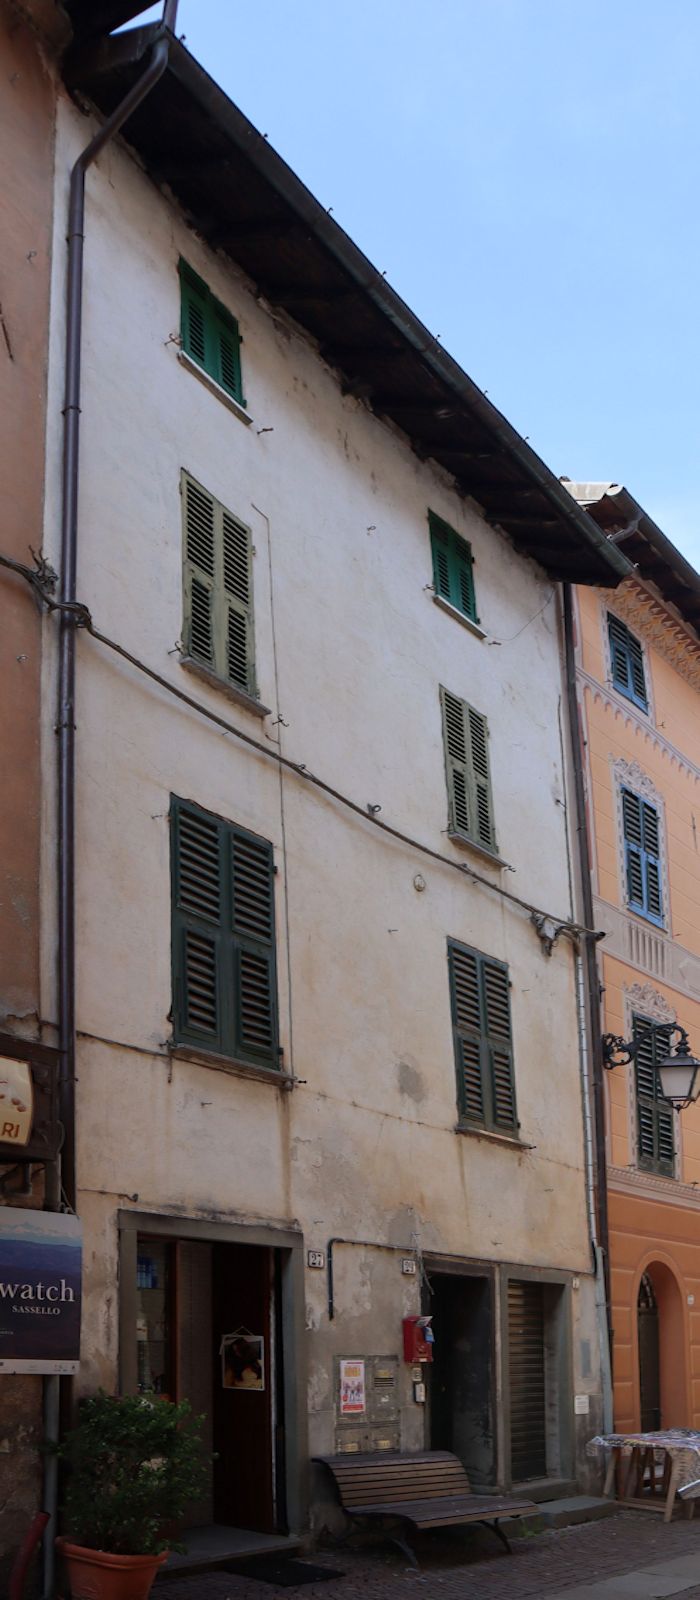 Chiaras Geburtshaus in Sassello